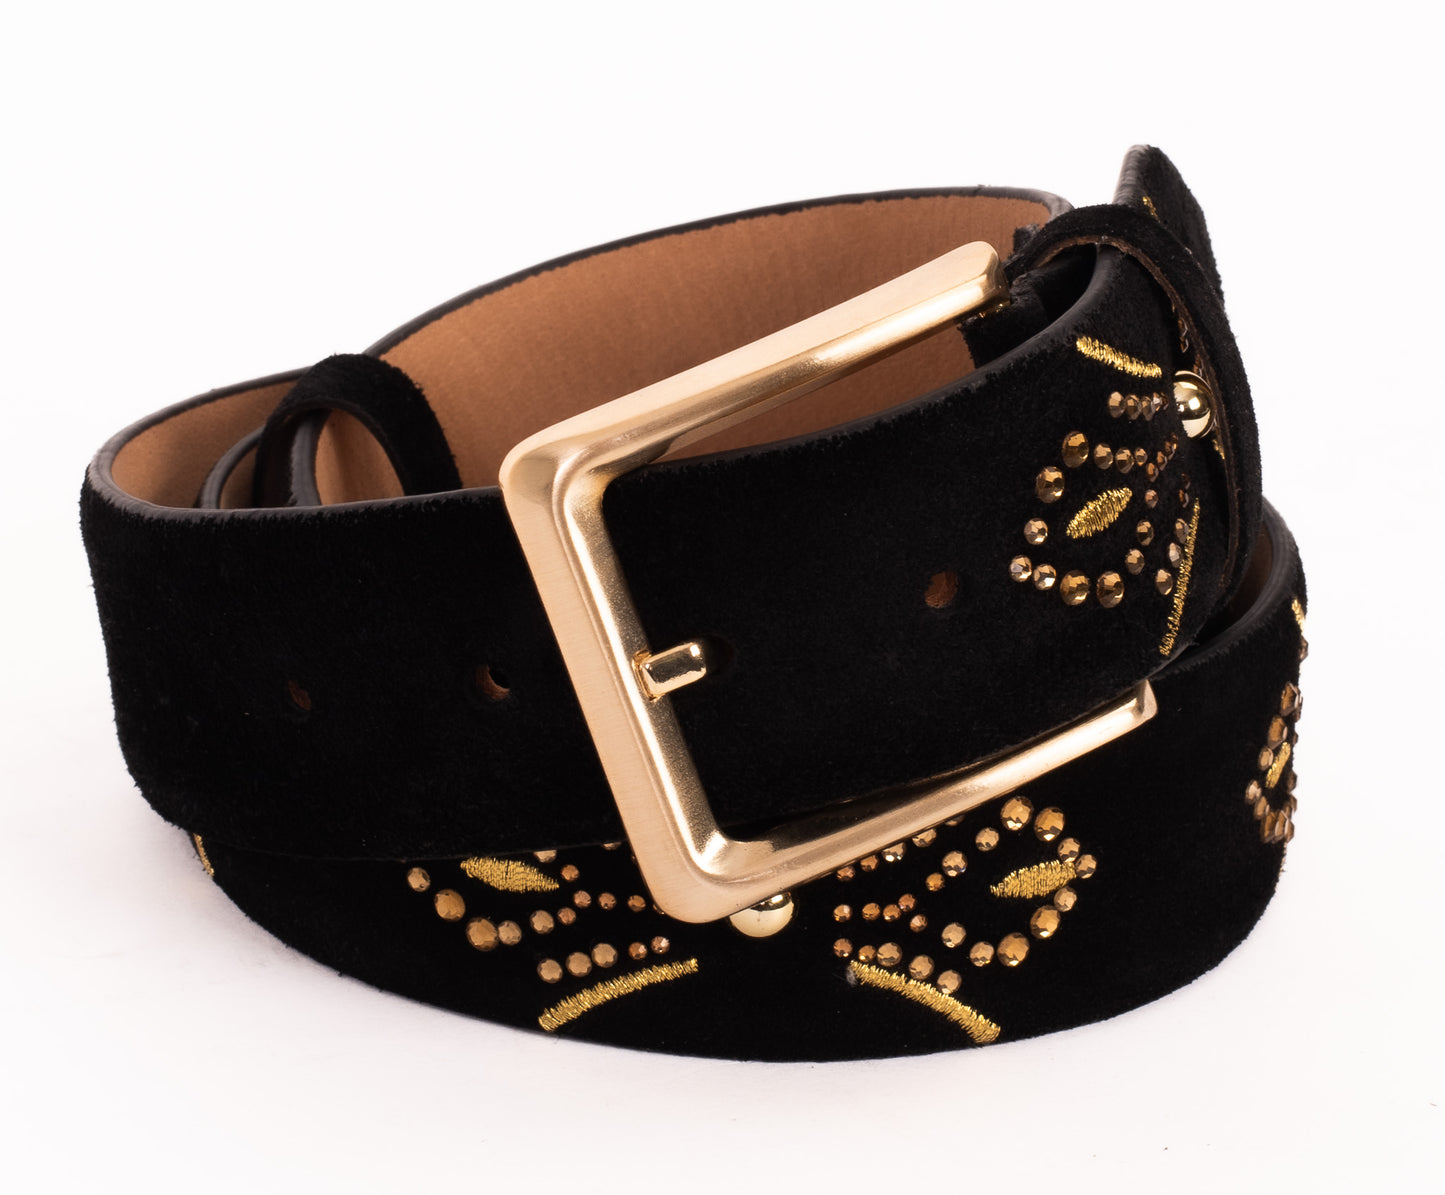 The Lazio Black Suede Leather Belt